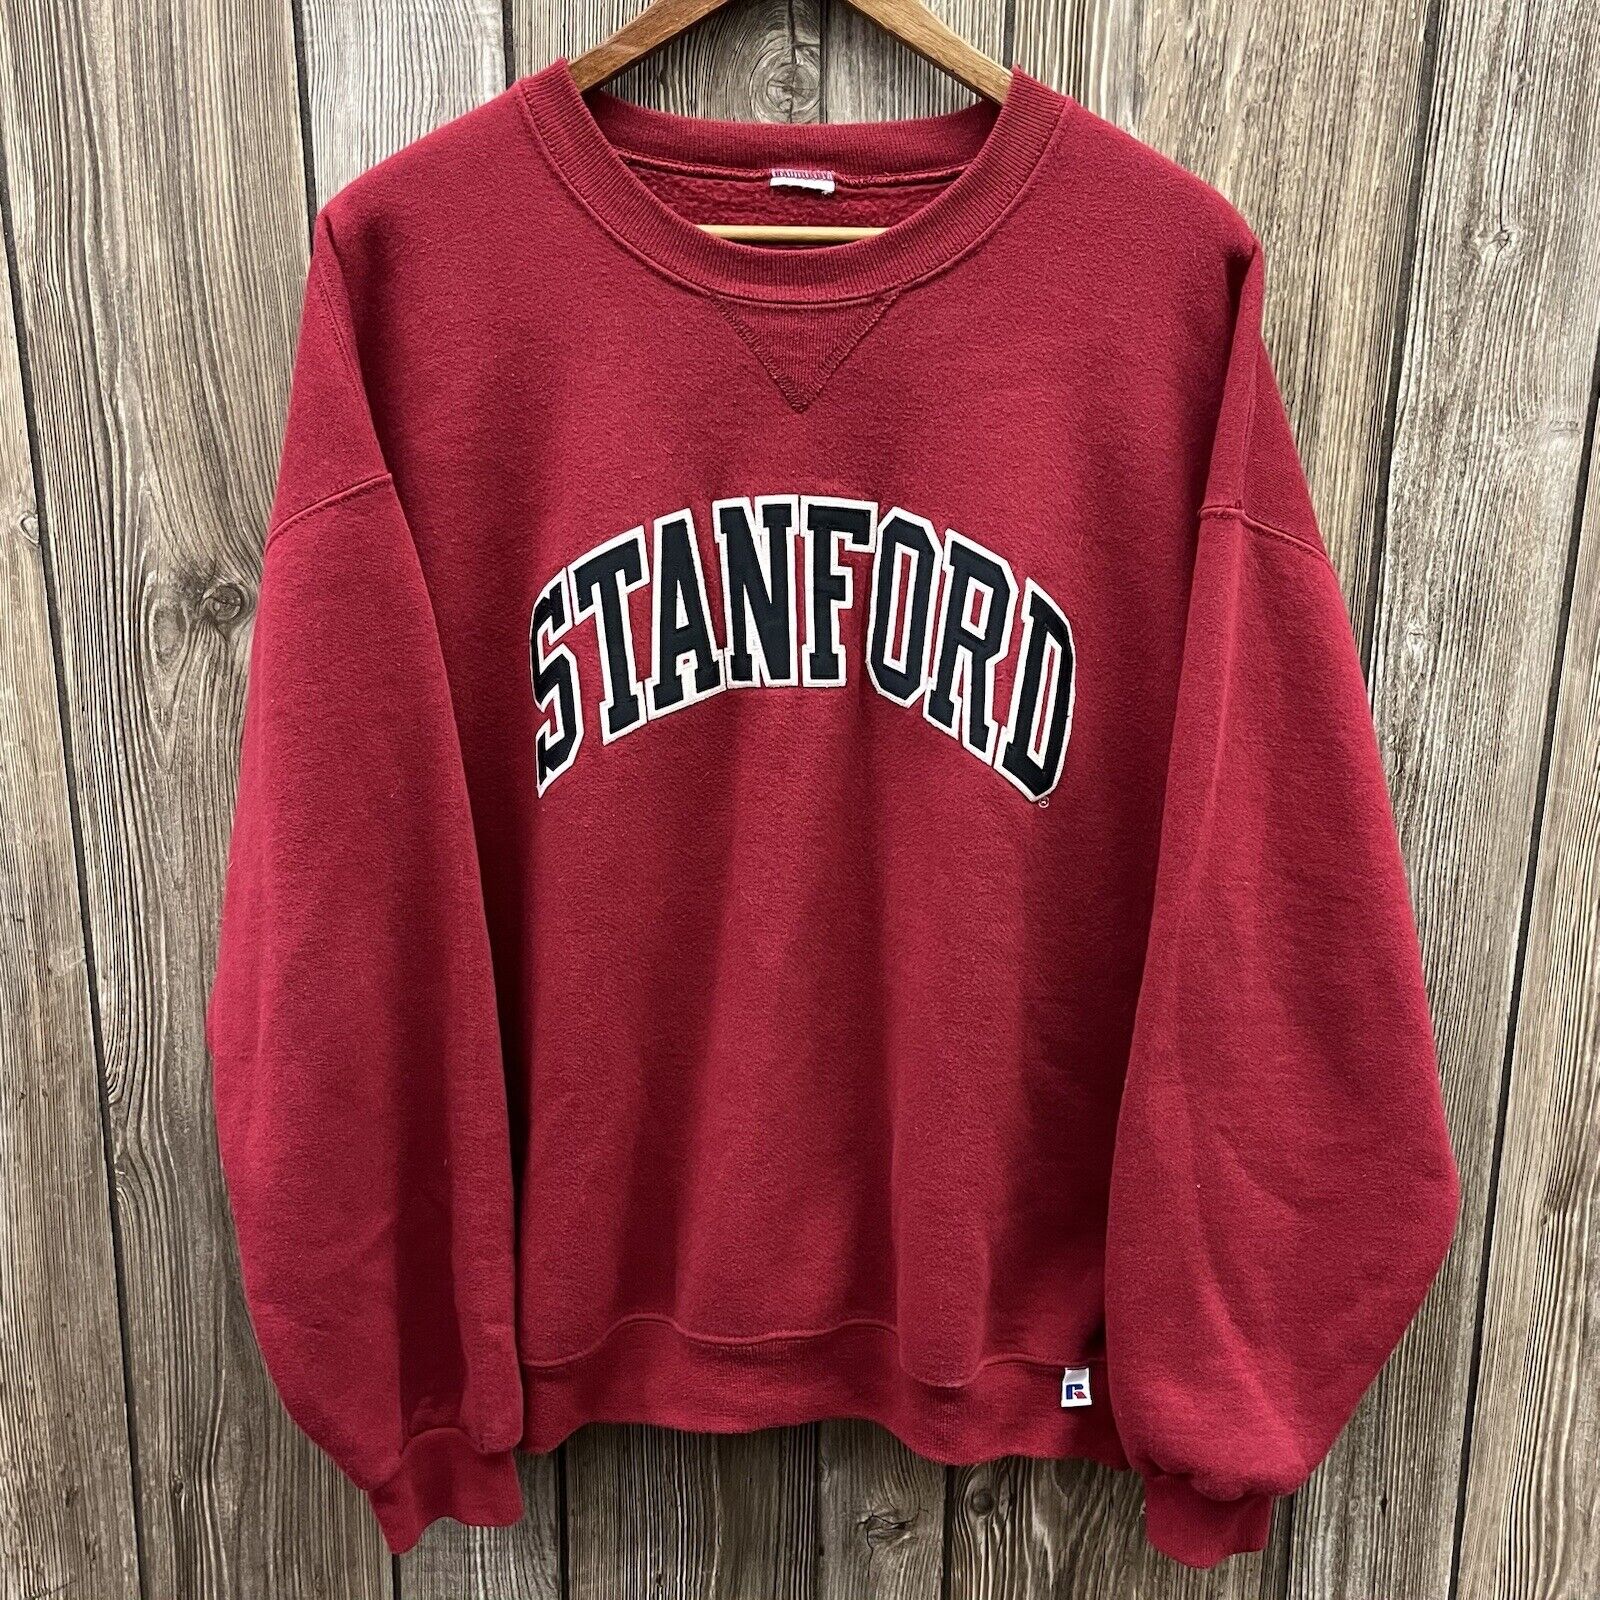 Vintage Stanford University Russell Athletic Crewneck Sweatshirt Red Size Large